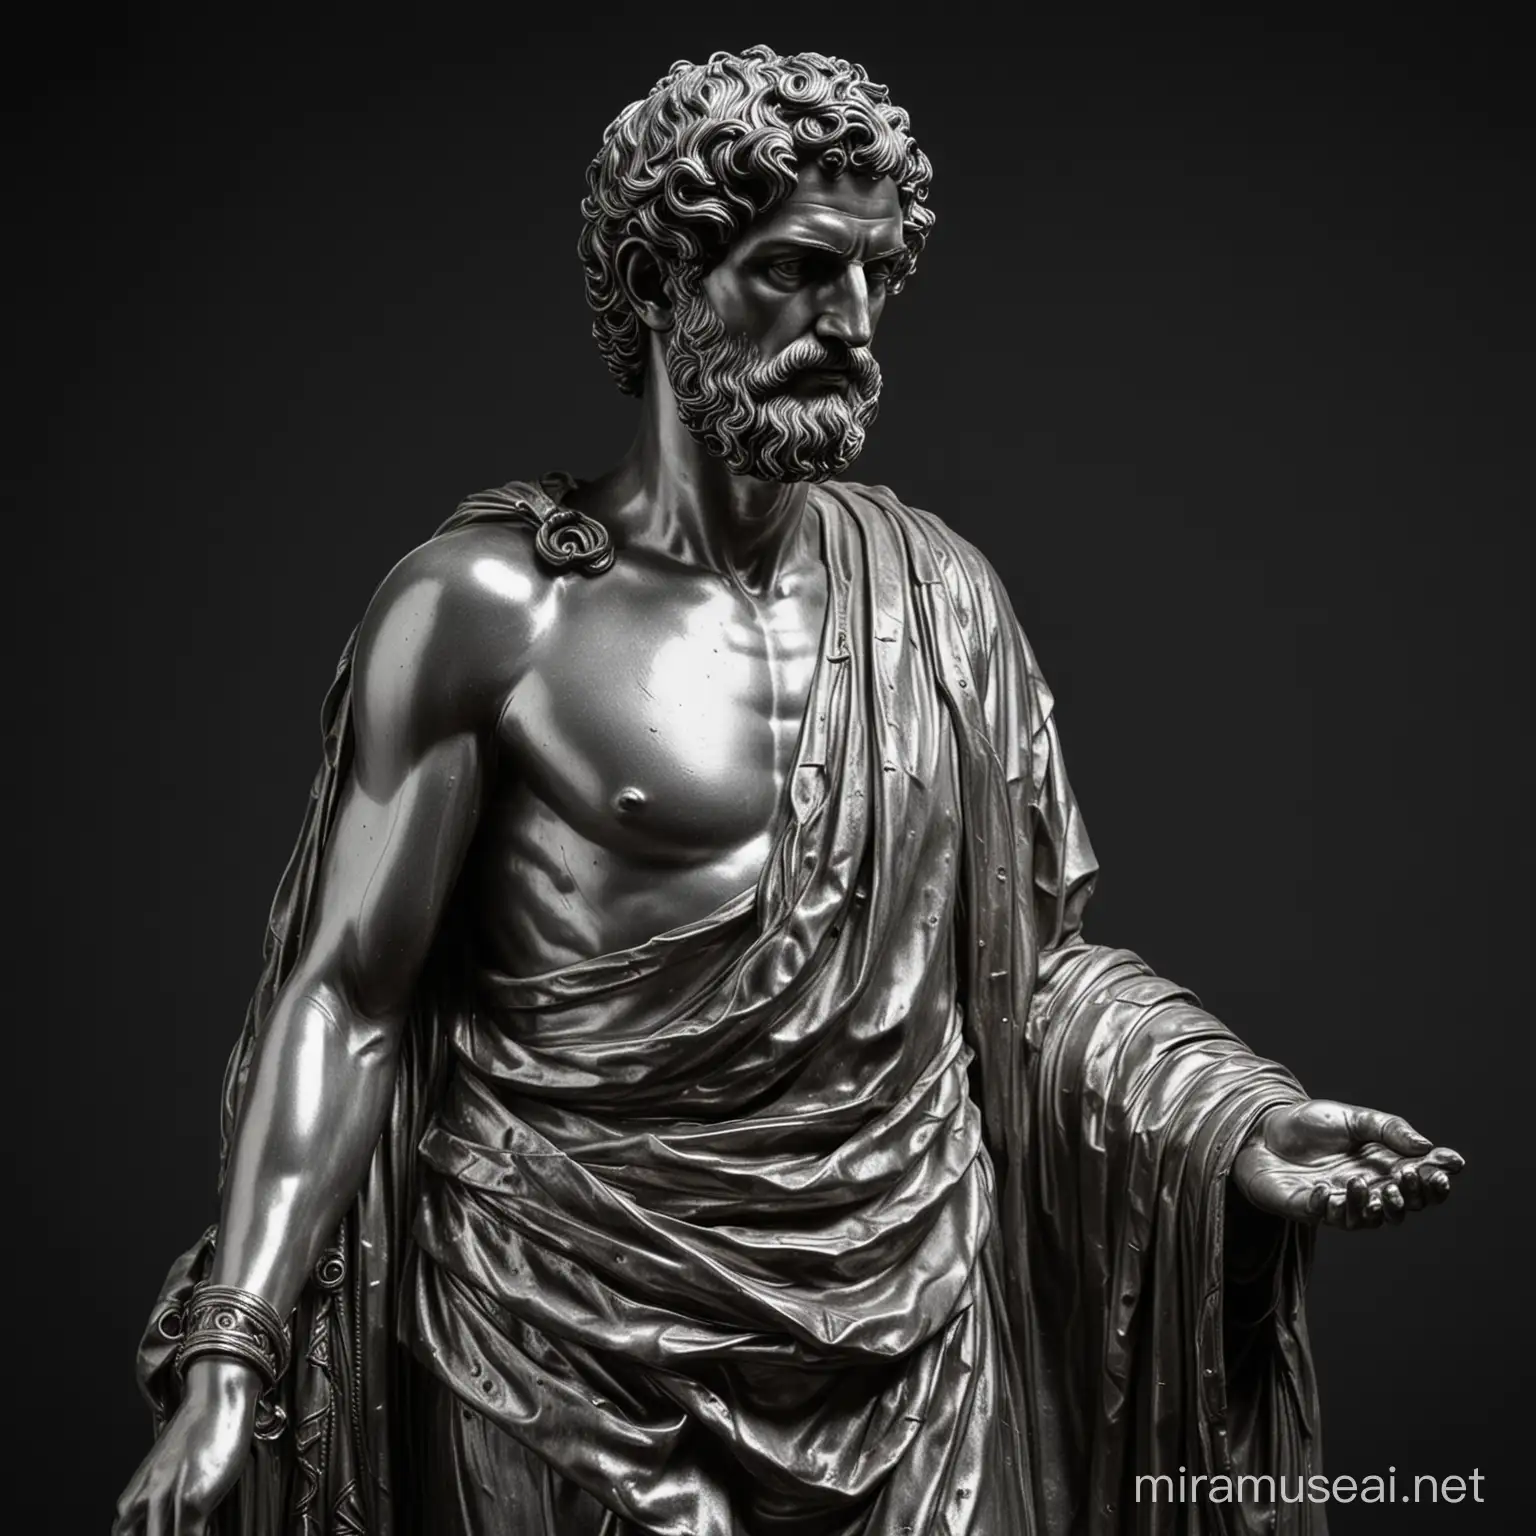 Ancient Philosopher Statue in Liquid Silver Toga Against Black Background